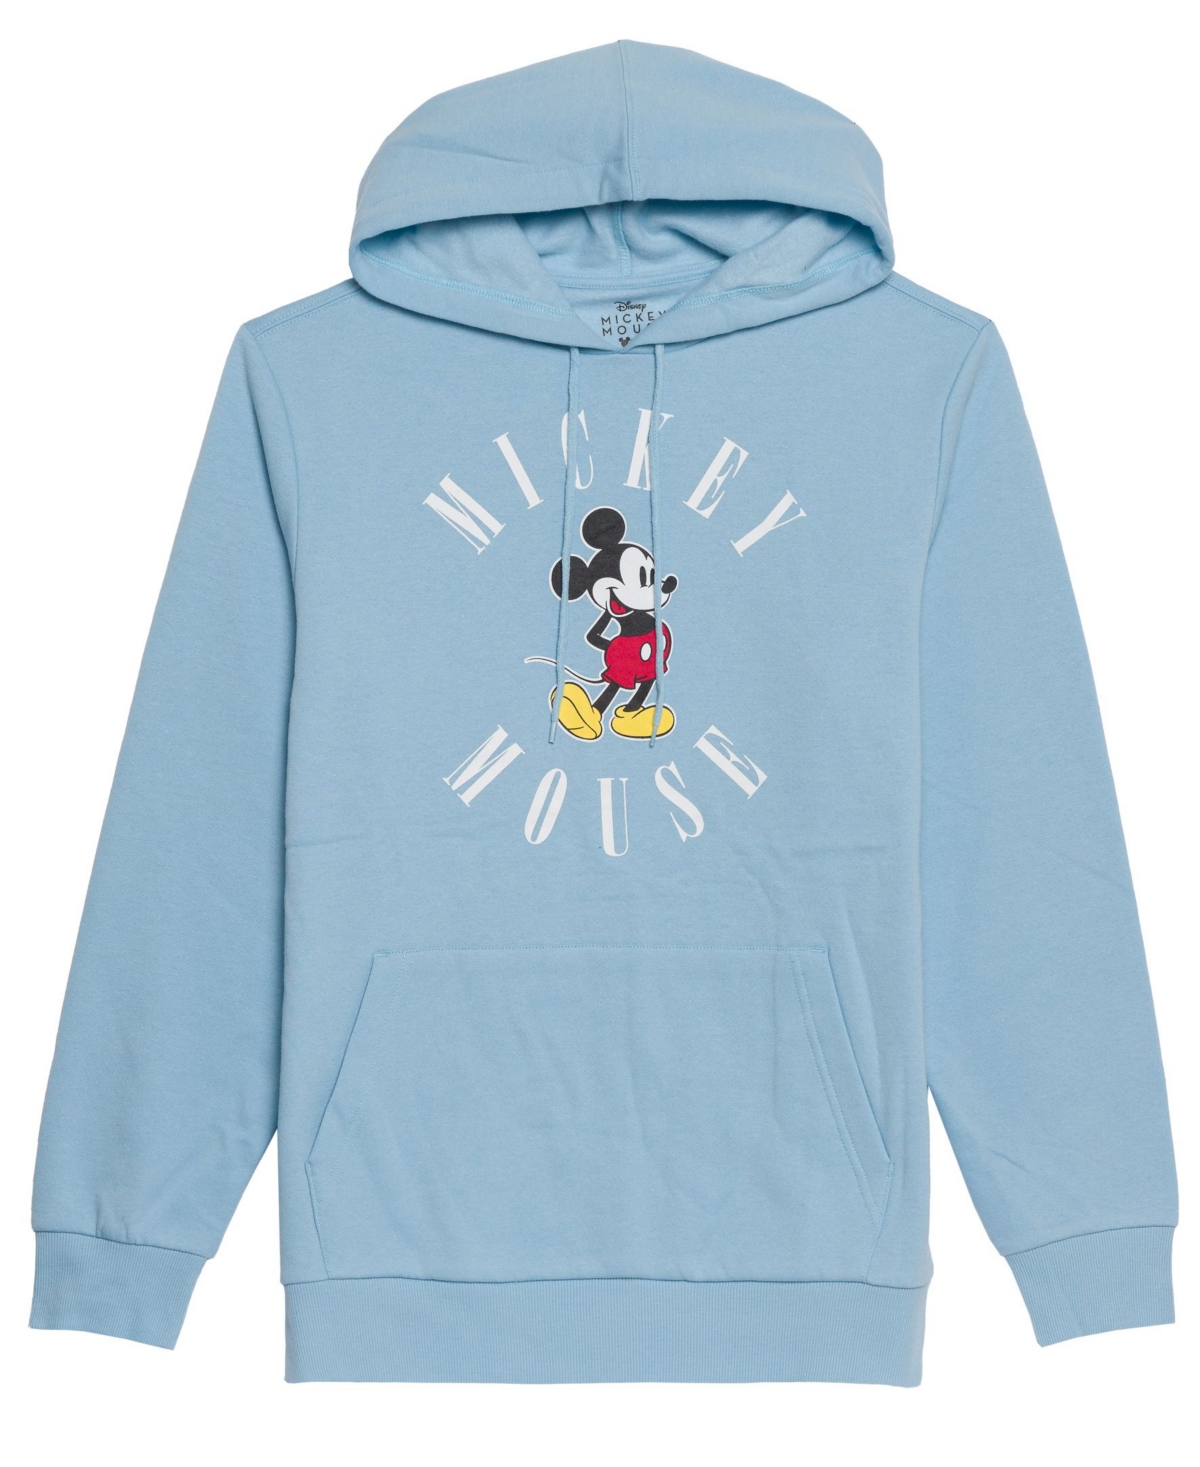 Hybrid Apparel Men's Nineties Mickey Mouse Hooded Fleece Sweatshirt